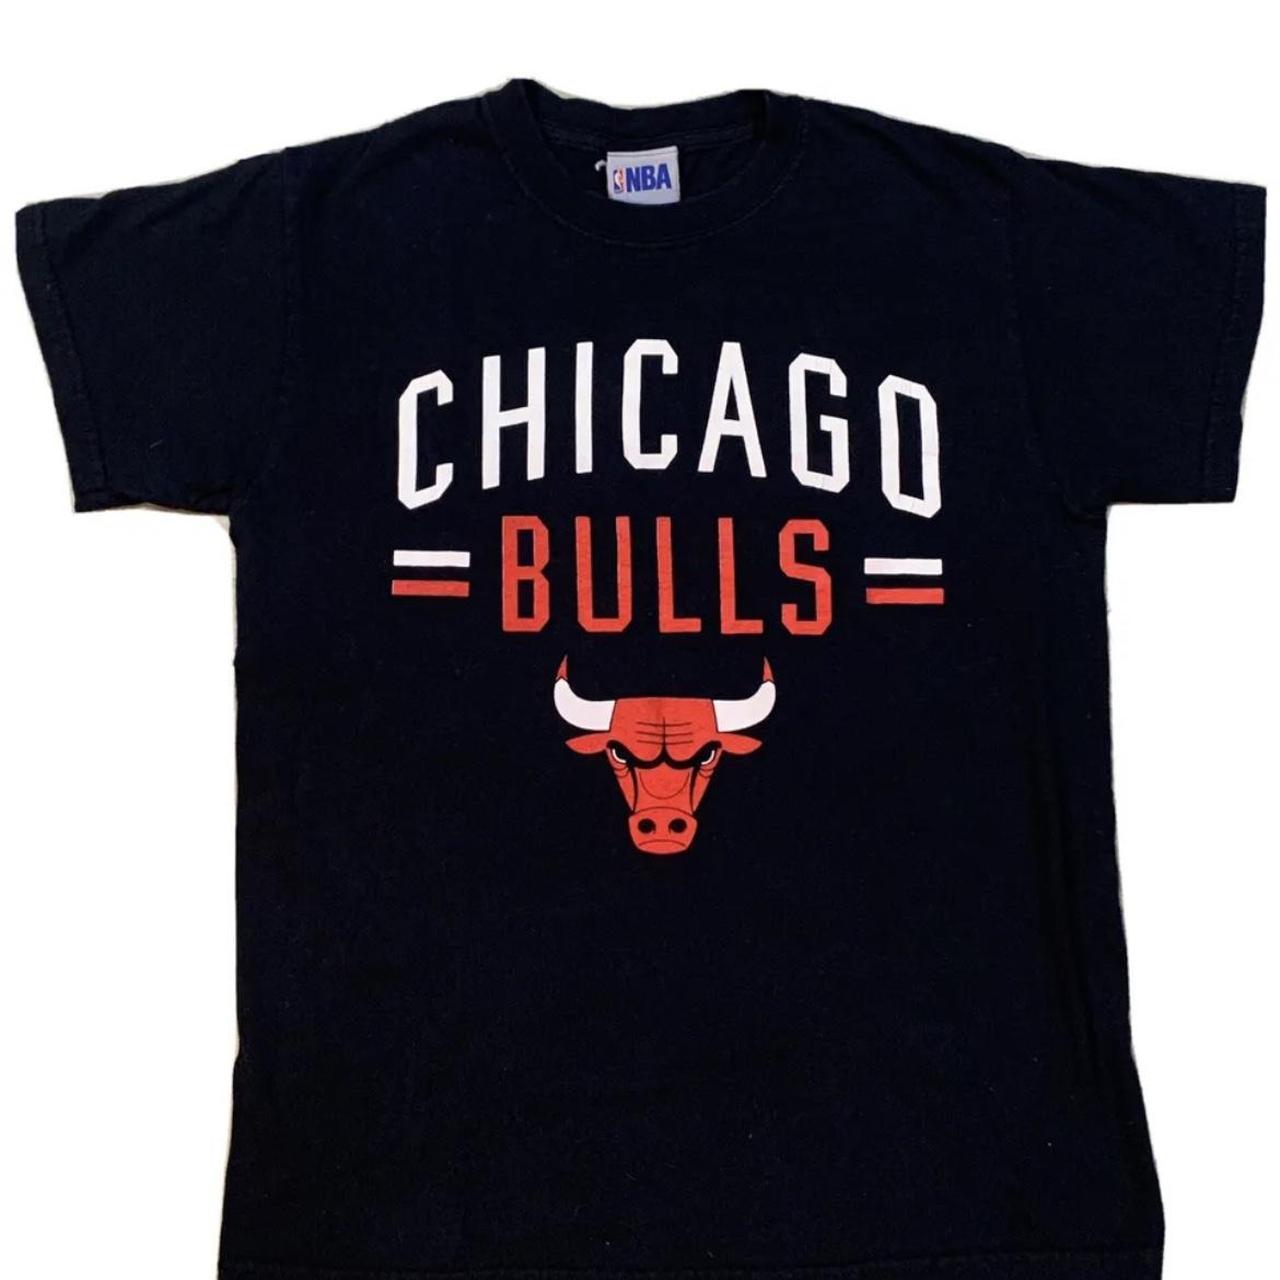 Chicago Bulls NBA T-shirt, black, red and white